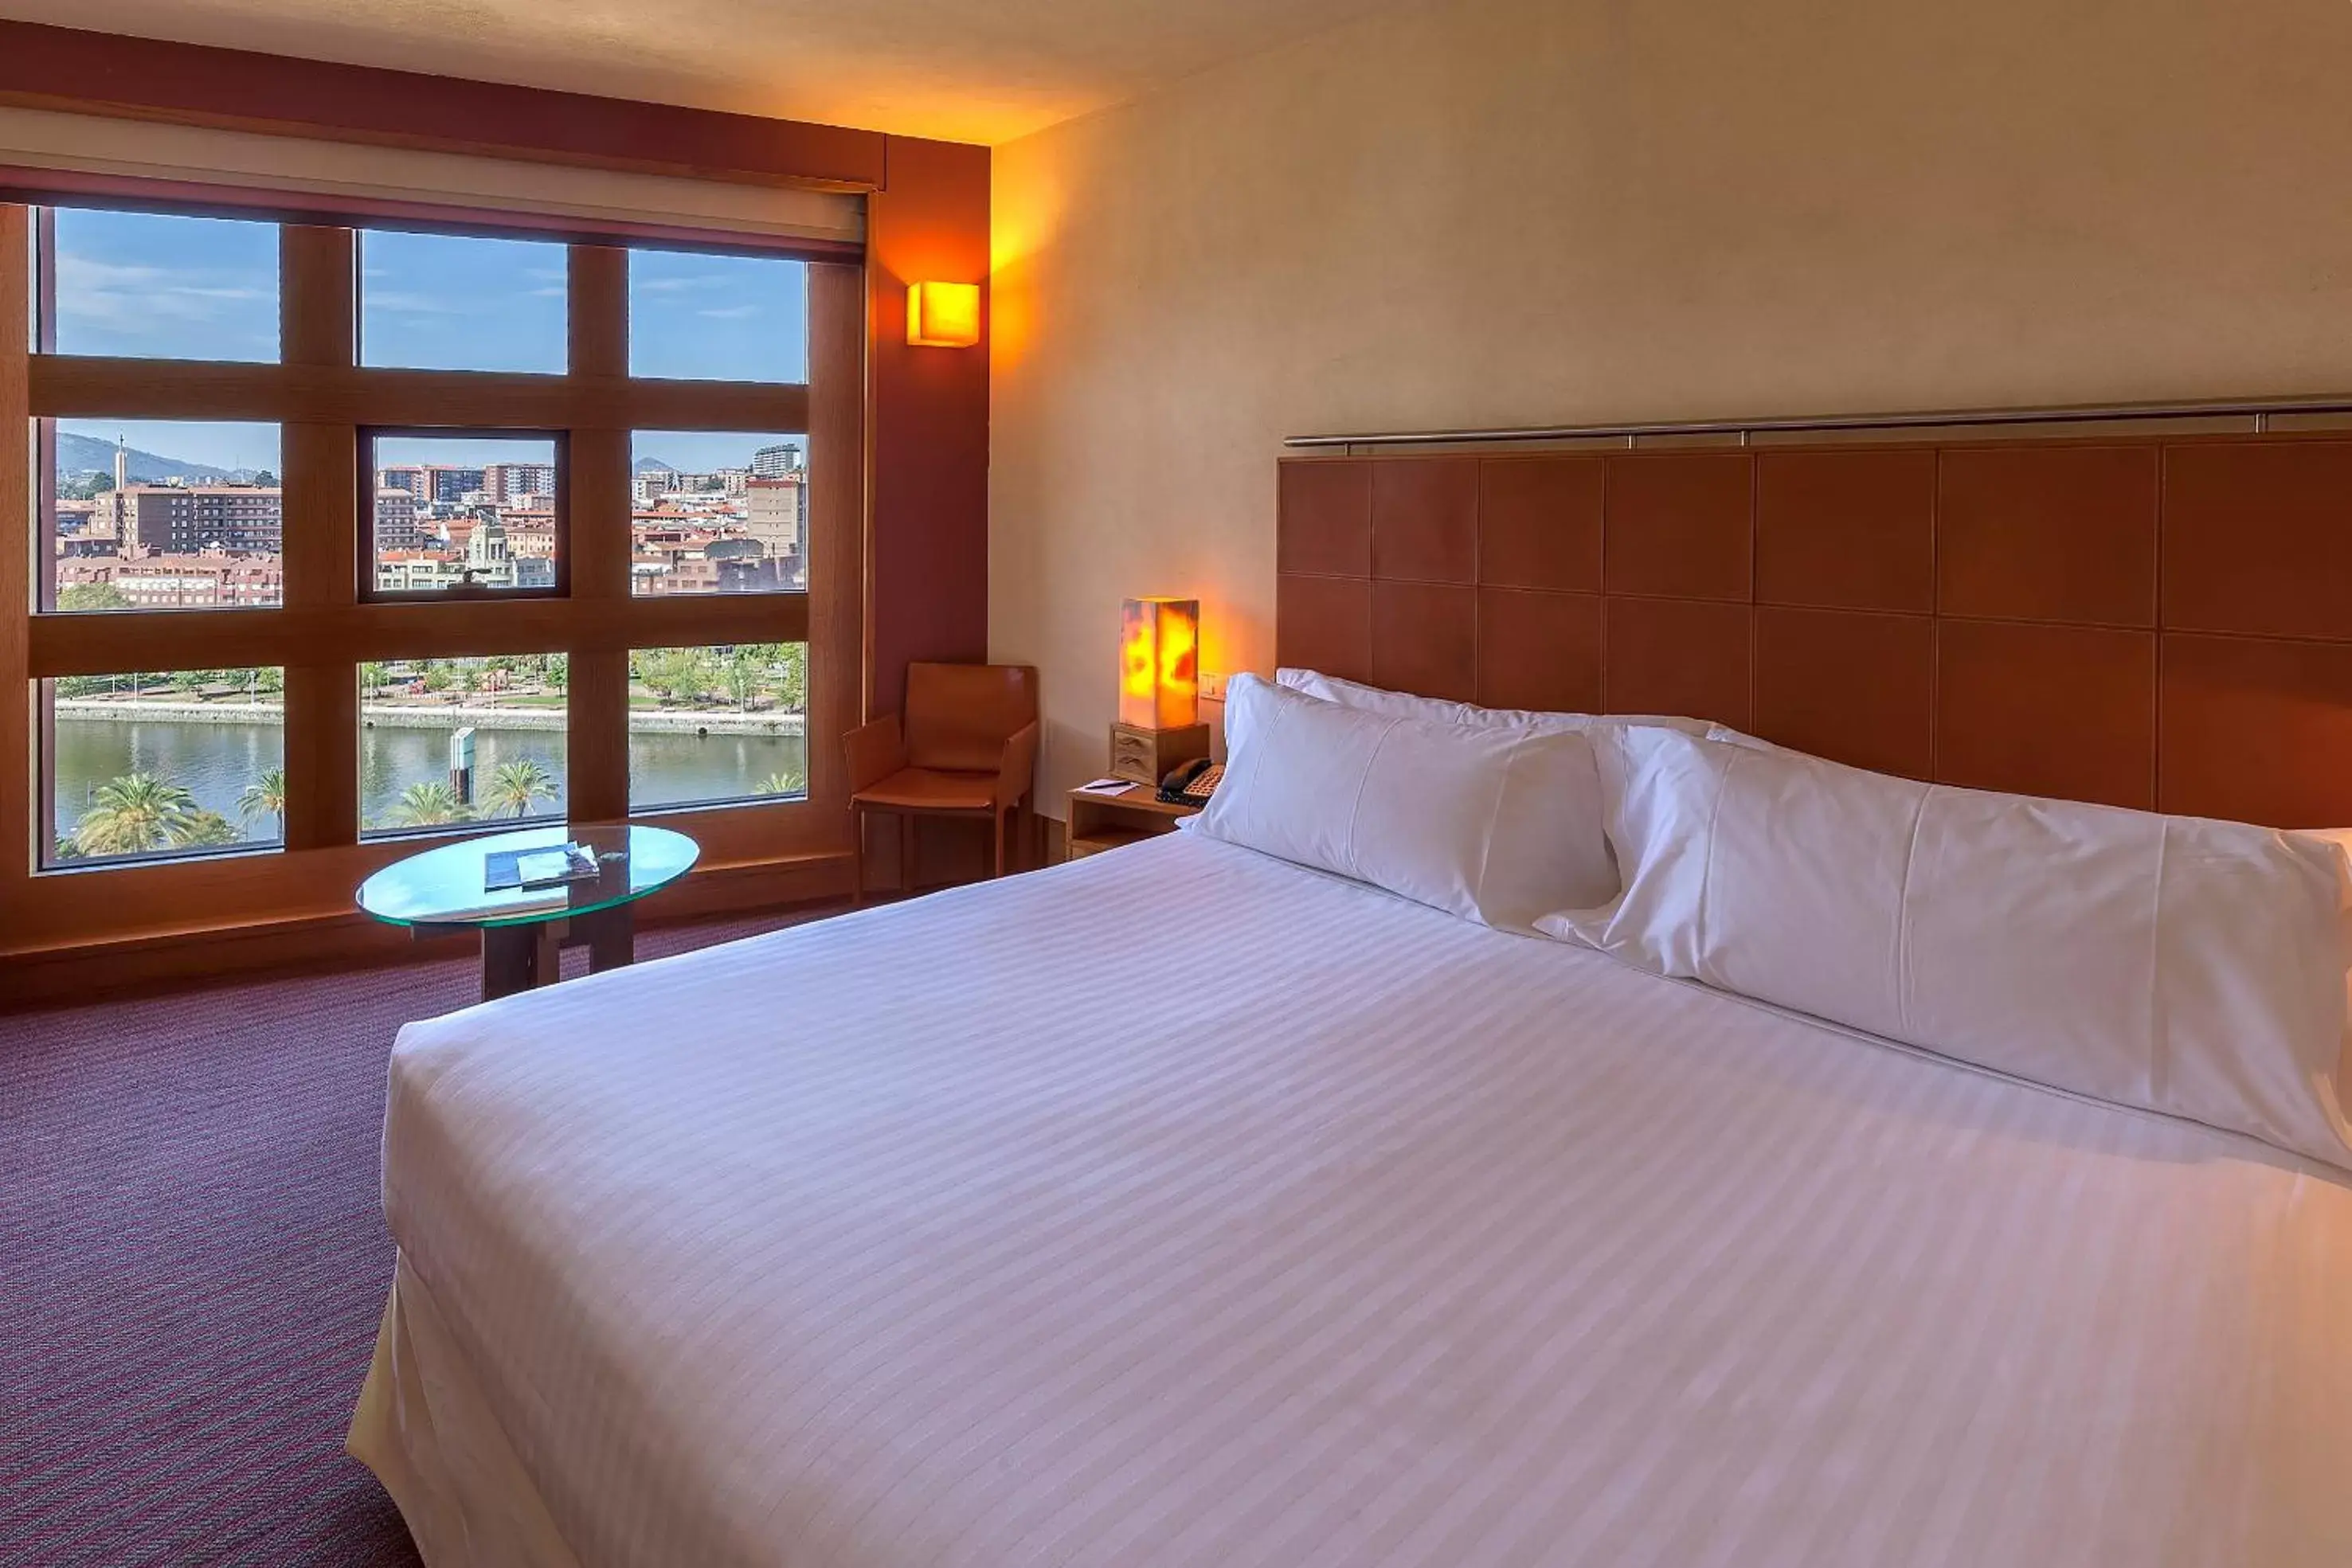 Bed, Room Photo in Hotel Melia Bilbao